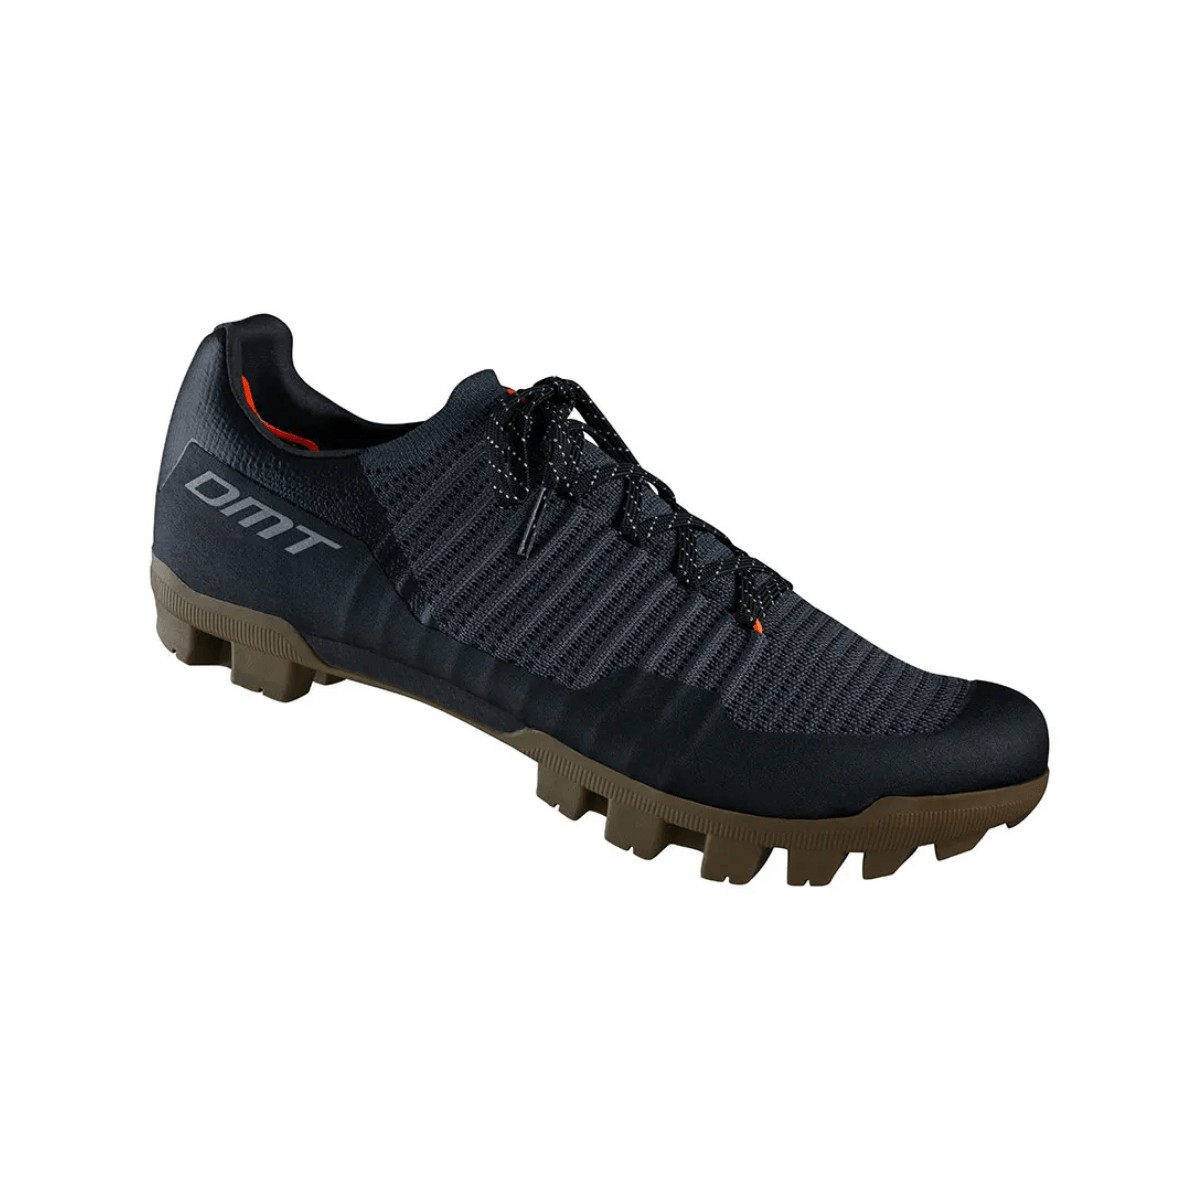 DMT GK1 Gravel Black Anthracite Shoes, Size 41 - EUR